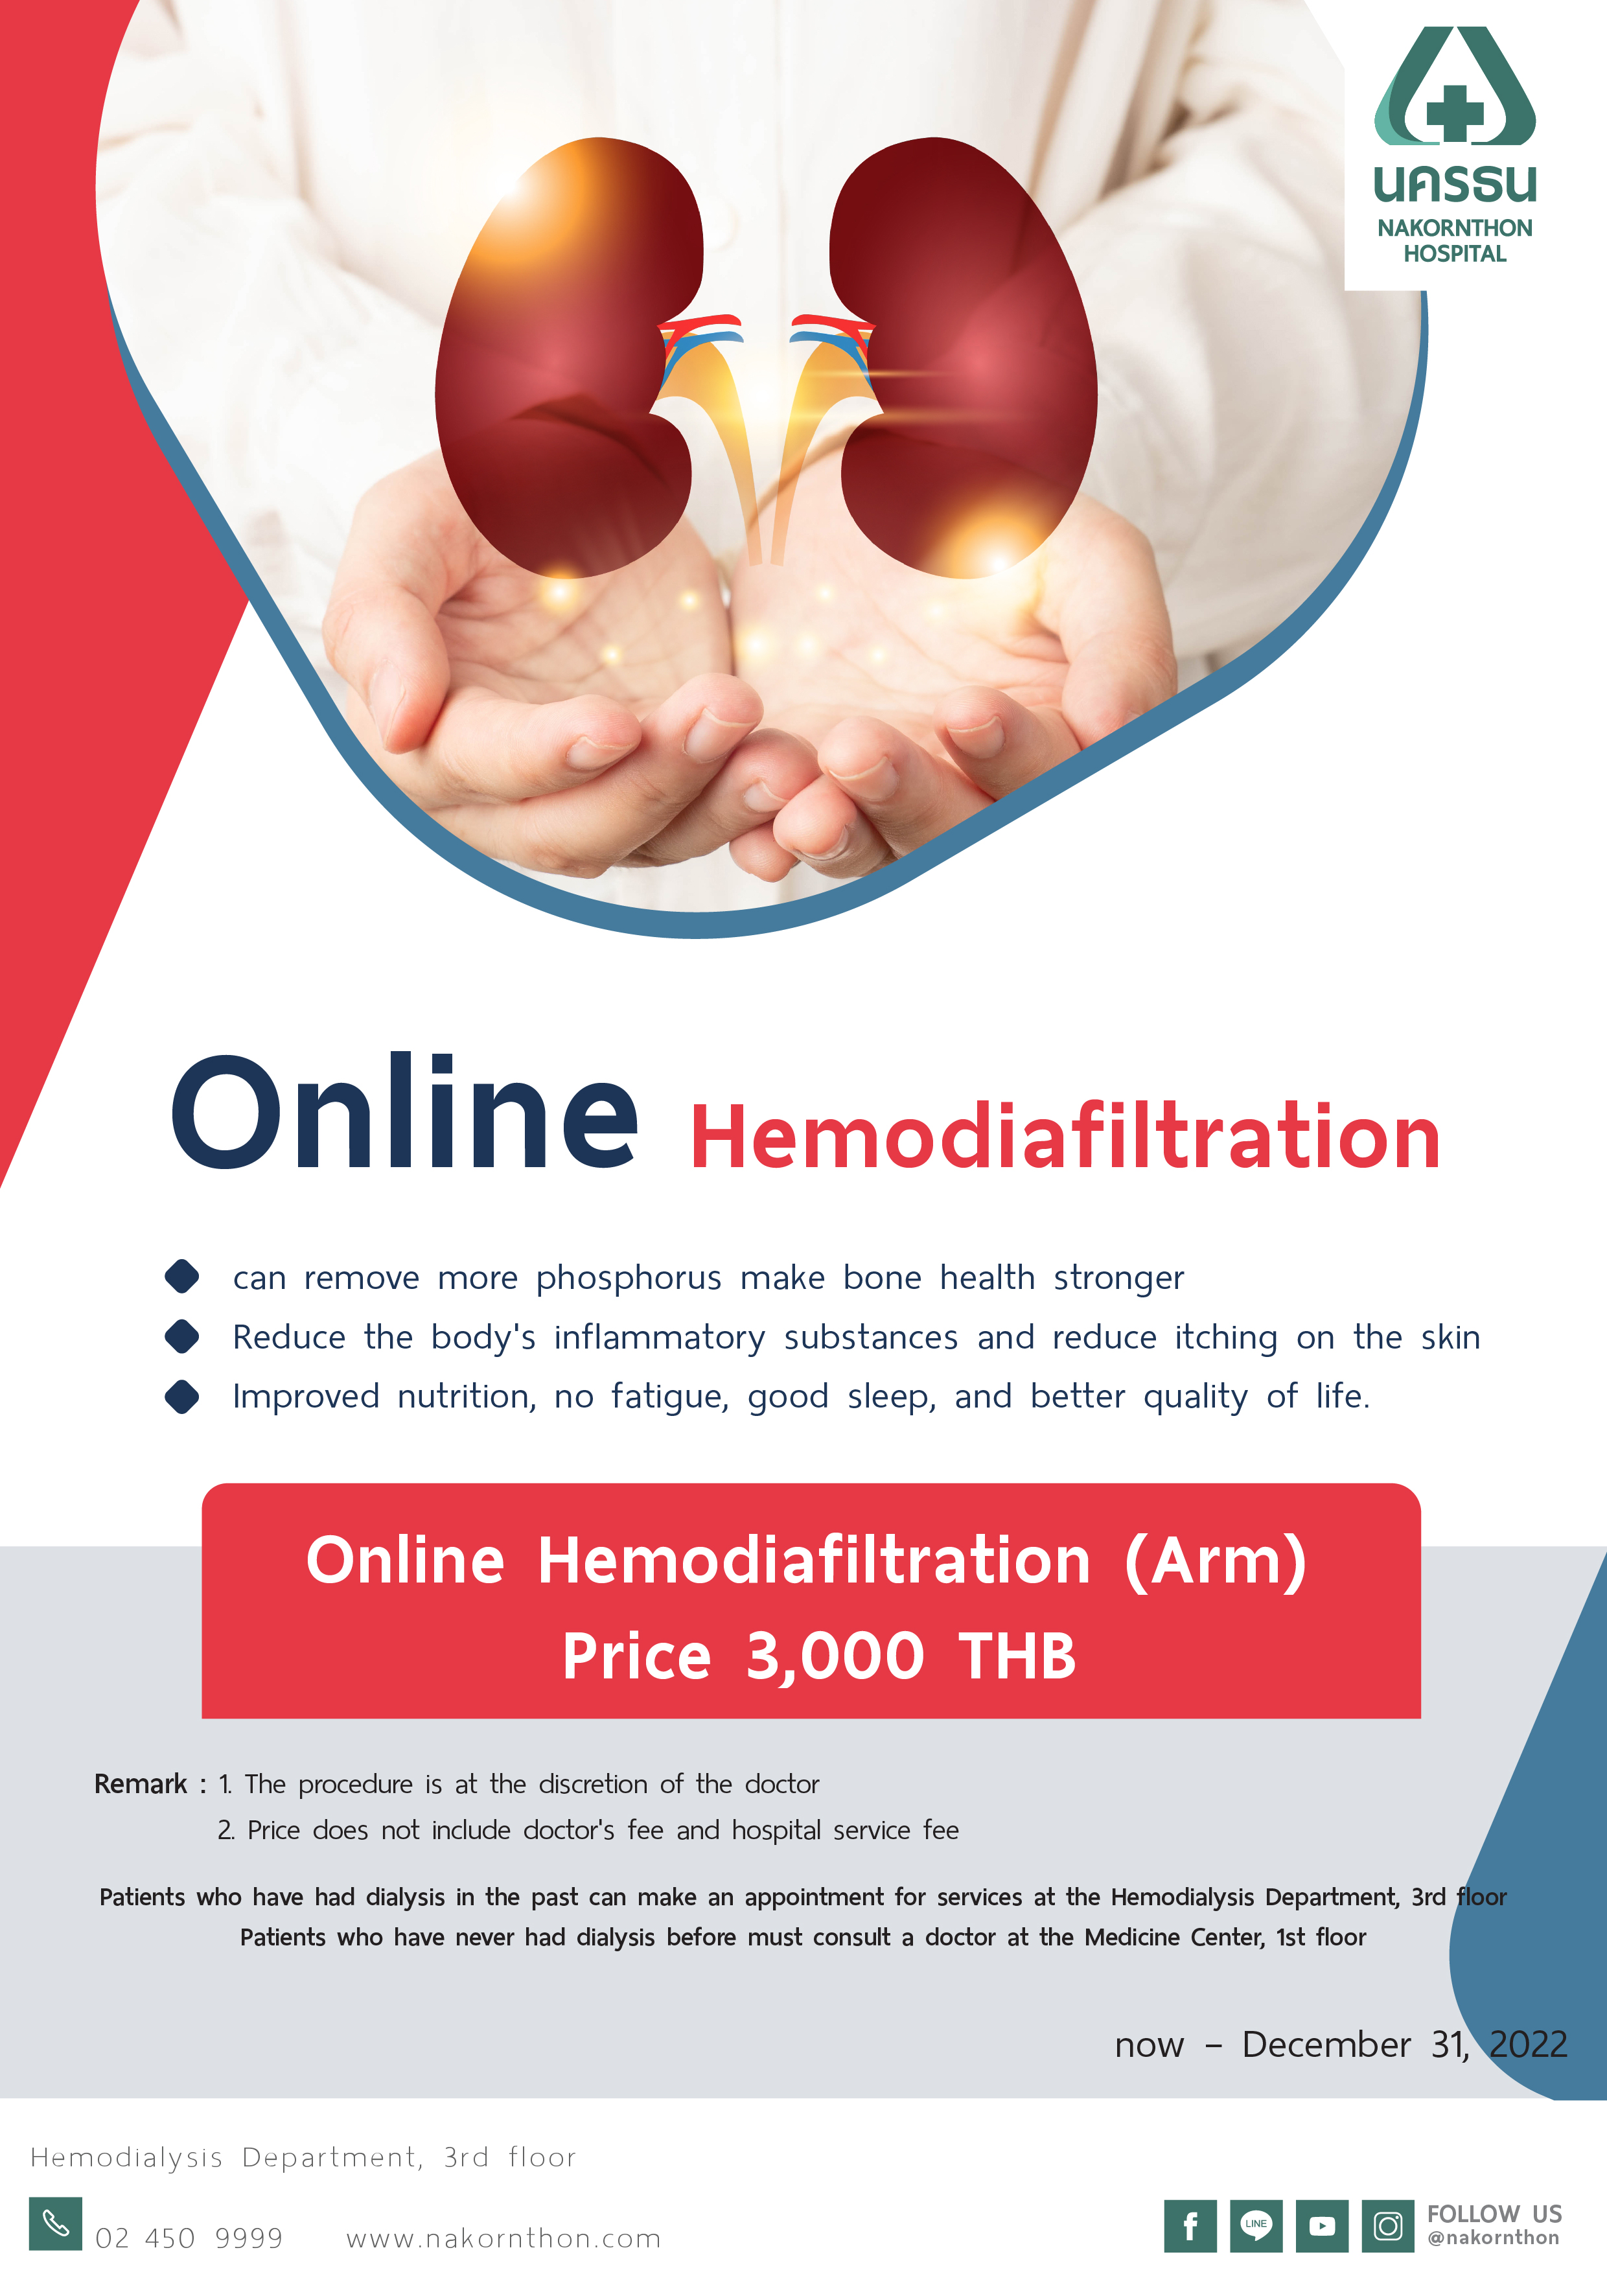 Hemodiafiltration